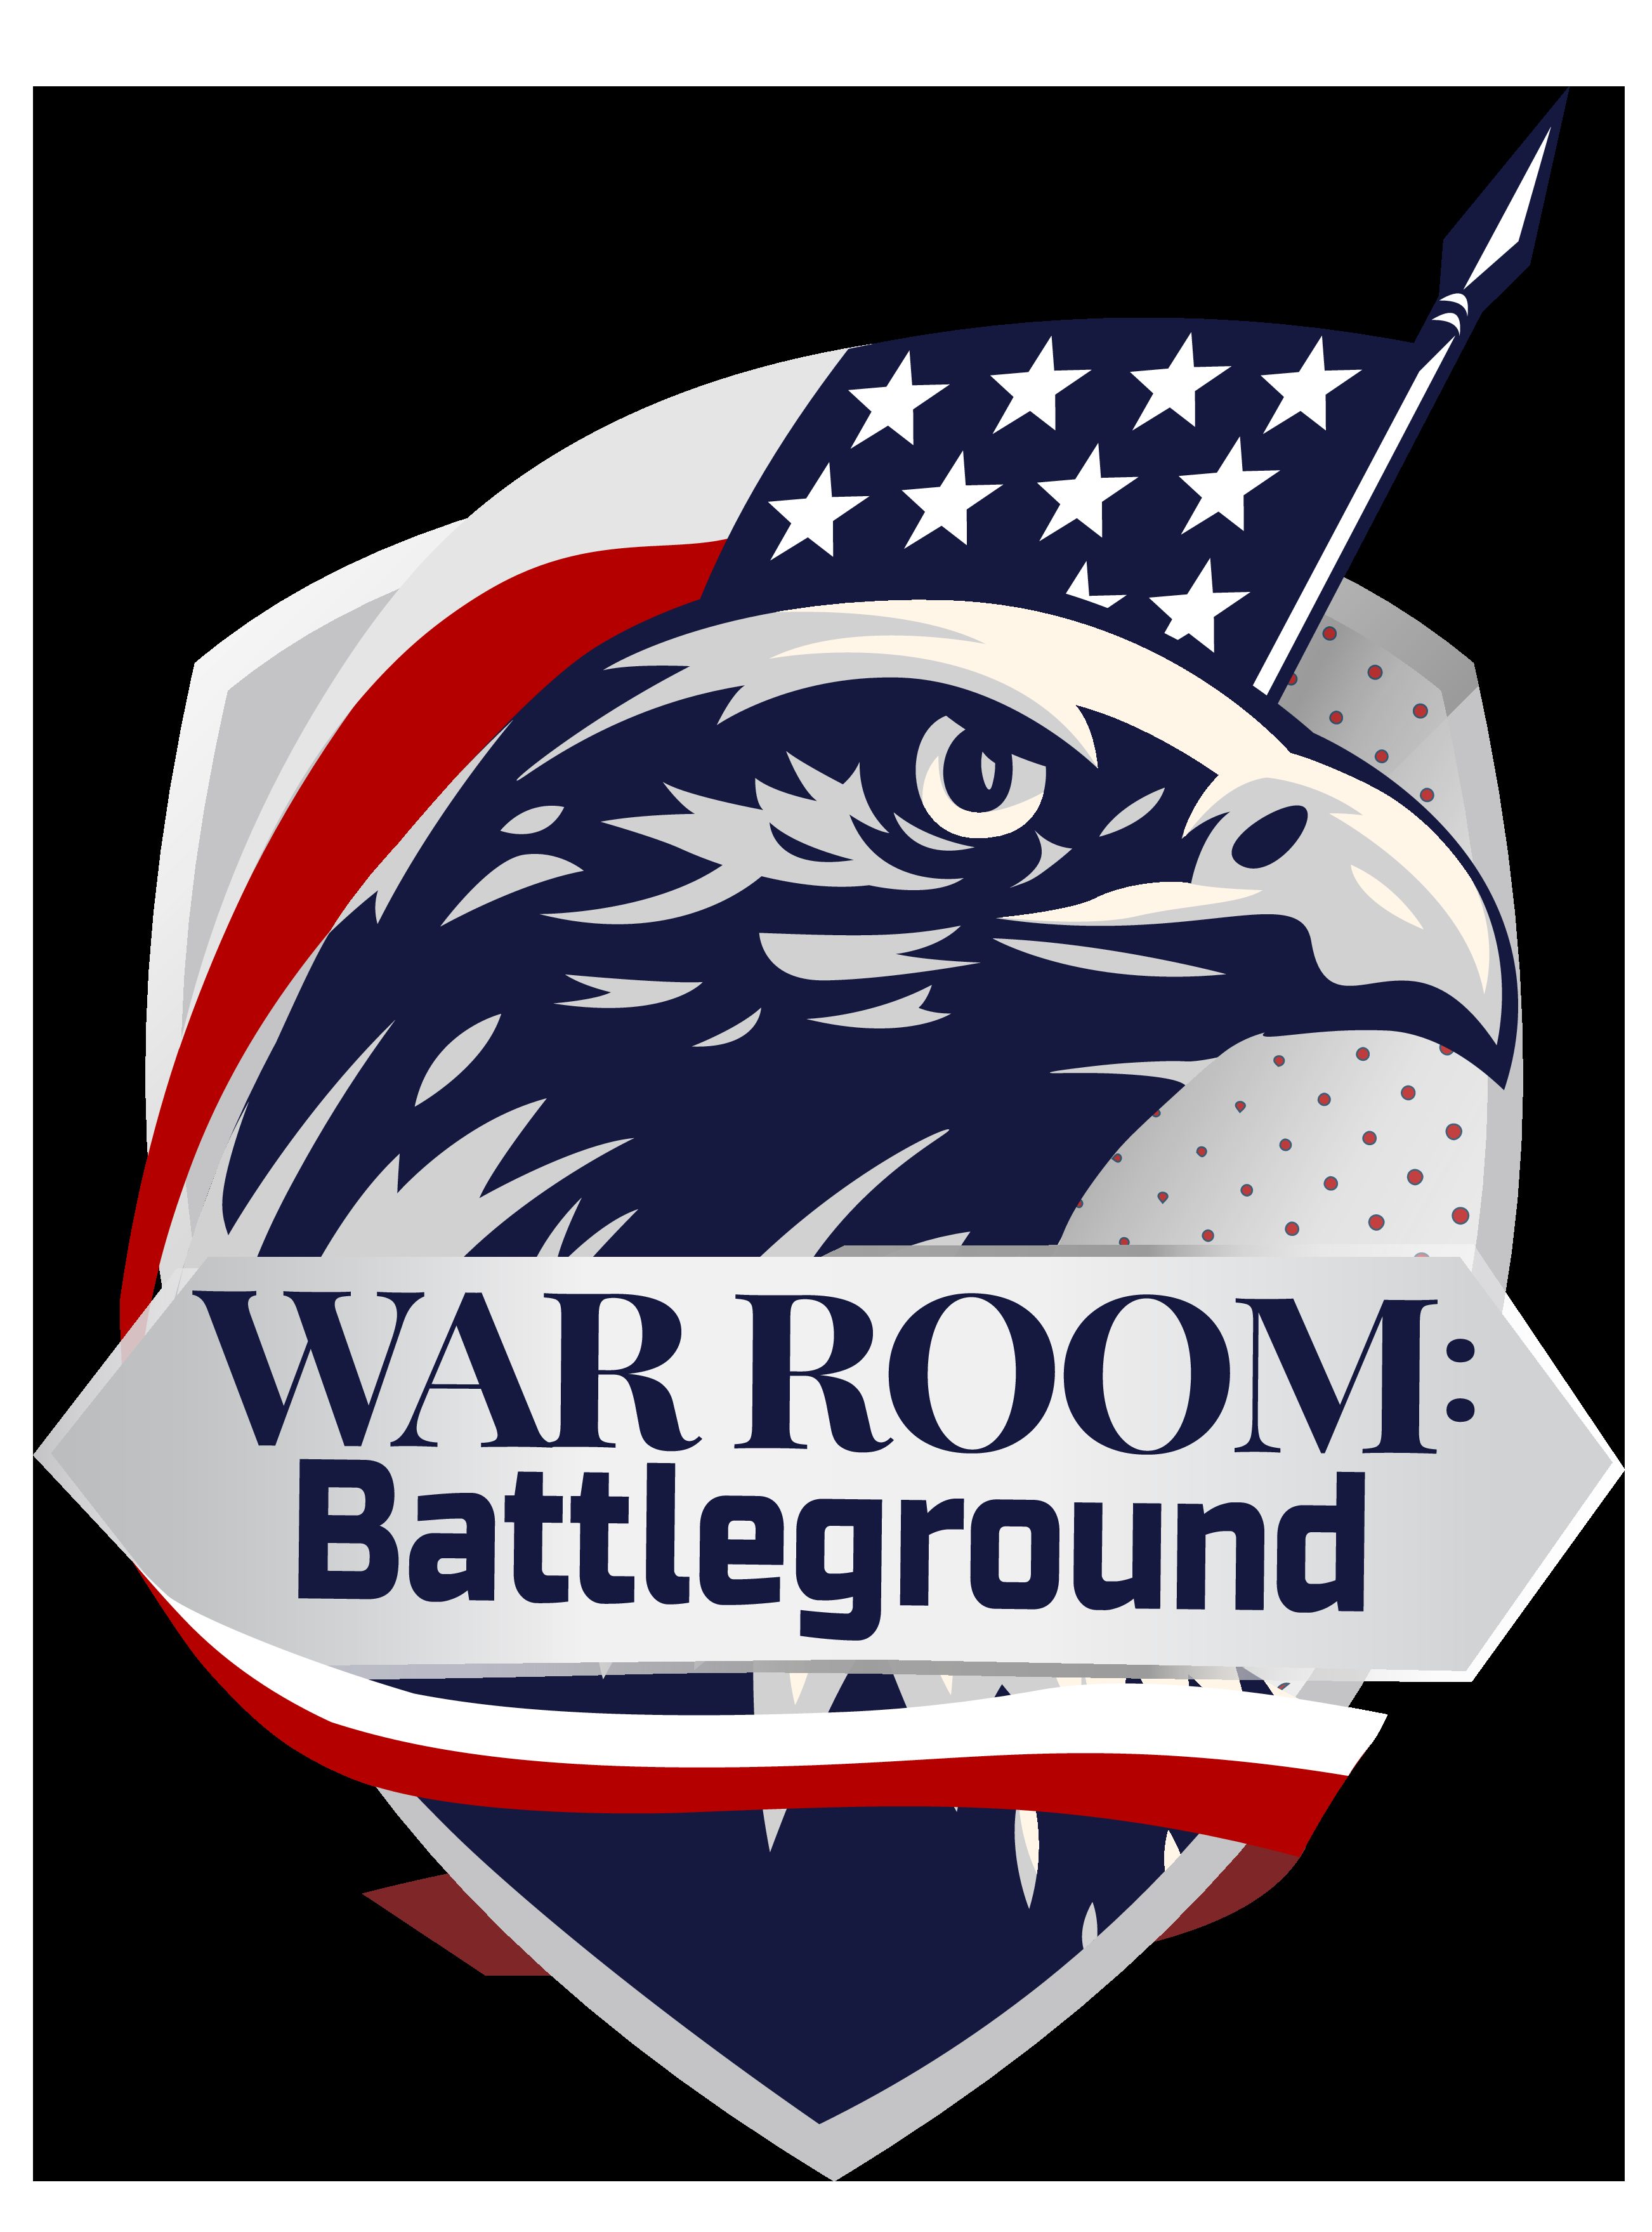 WarRoom Battleground EP 254: The Trials Of Fauci